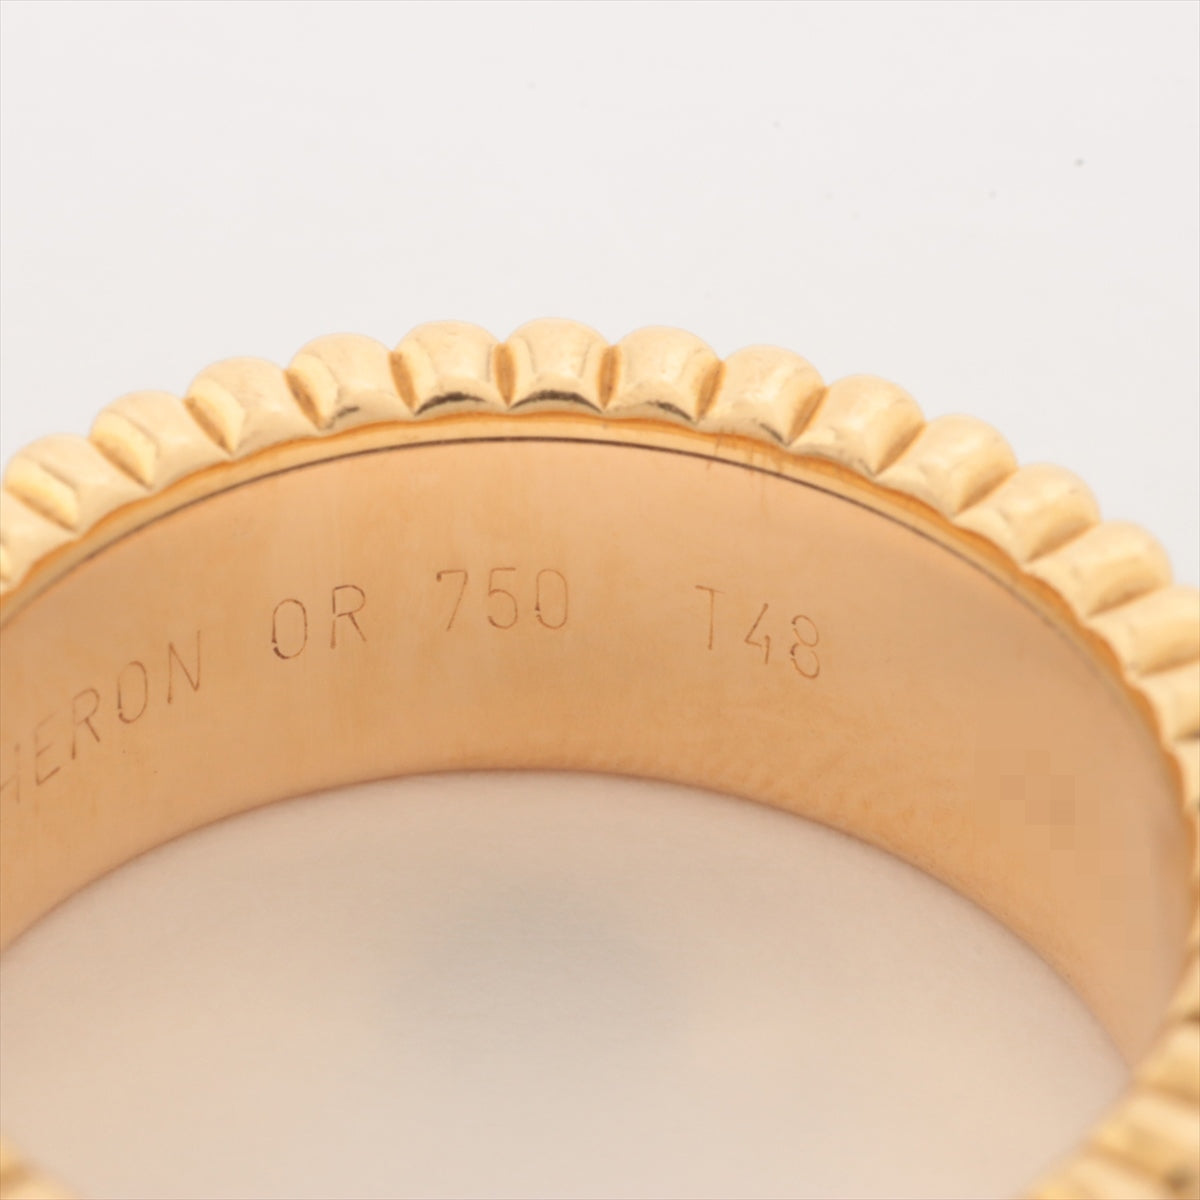 Boucheron Quatre Classic Small Ring 750(YG×PG×WG) 8.1g 48 Initial